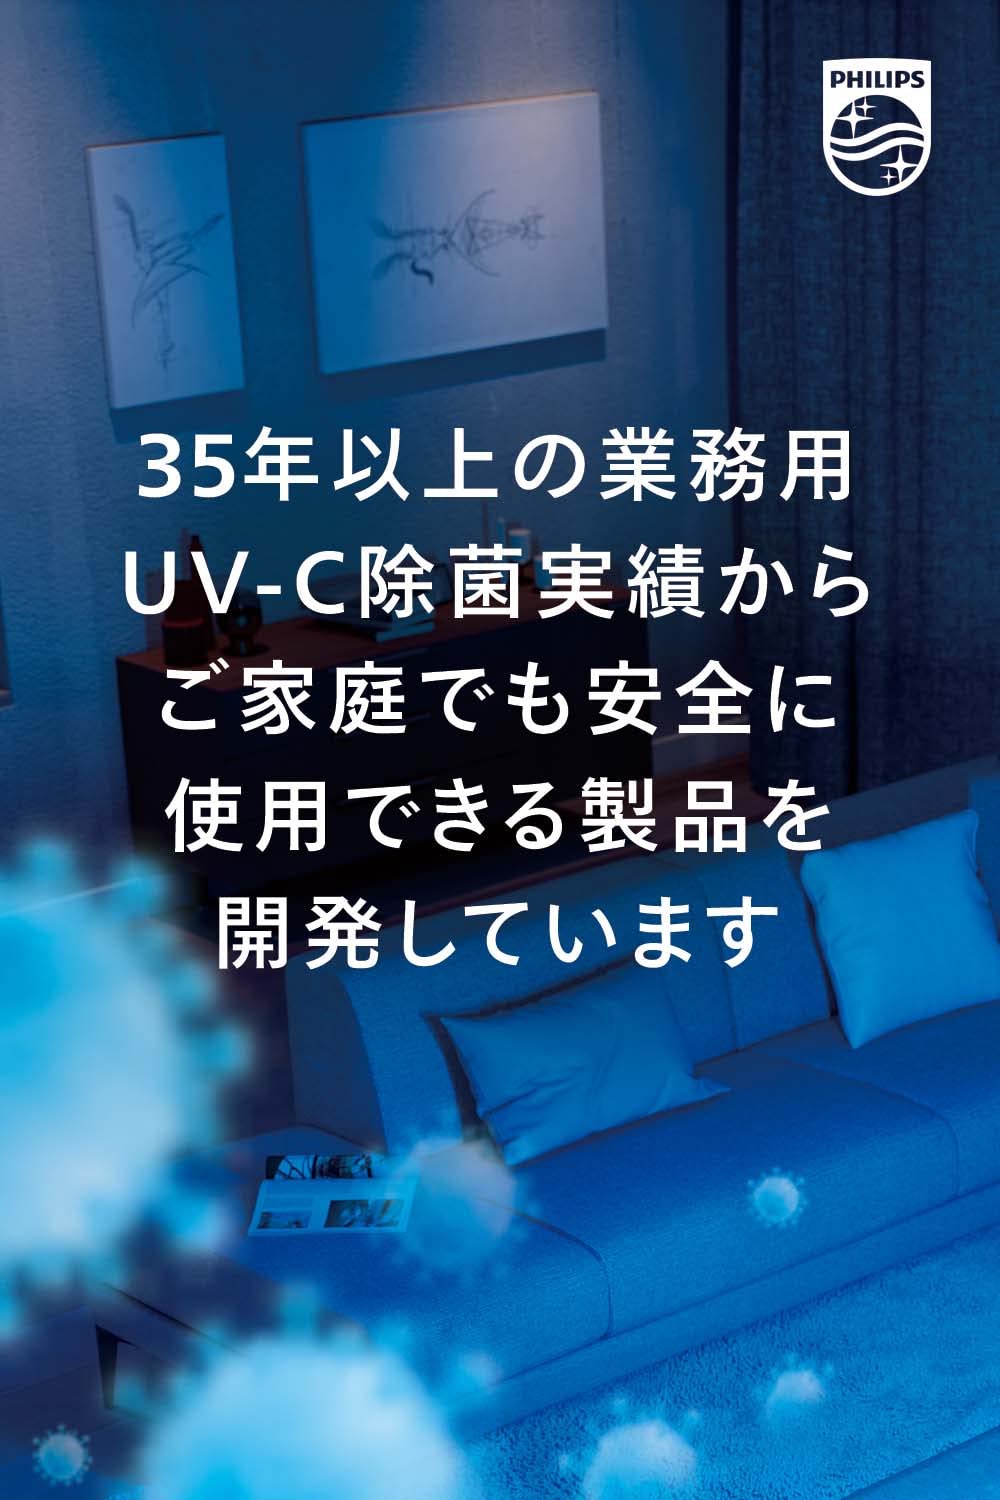 Philips UVC Disinfecting Light UV Disinfecting Lamp UVC-DESK24WS1 - WAFUU JAPAN